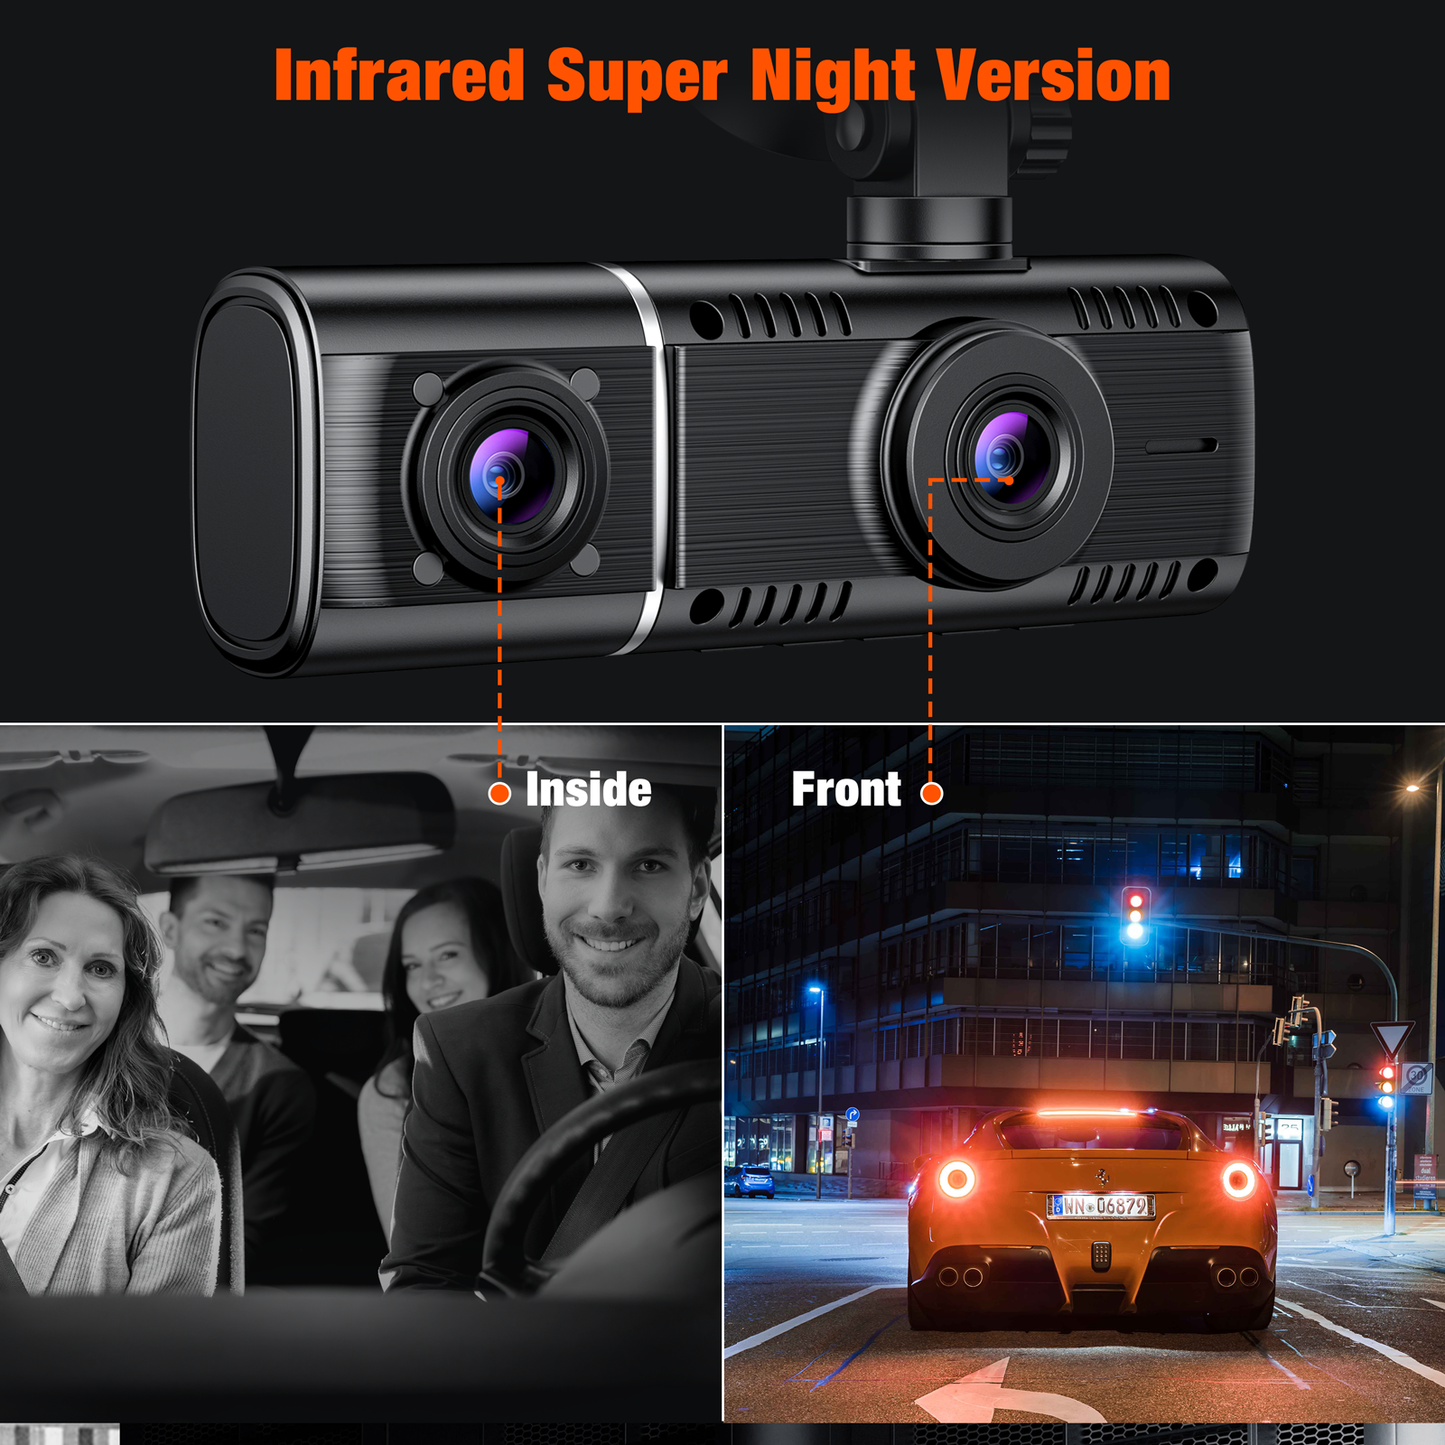 Dash Cam Front Rear Inside, TOGUARD 1080P Dash Camera Infrared Night Vision Car Camera